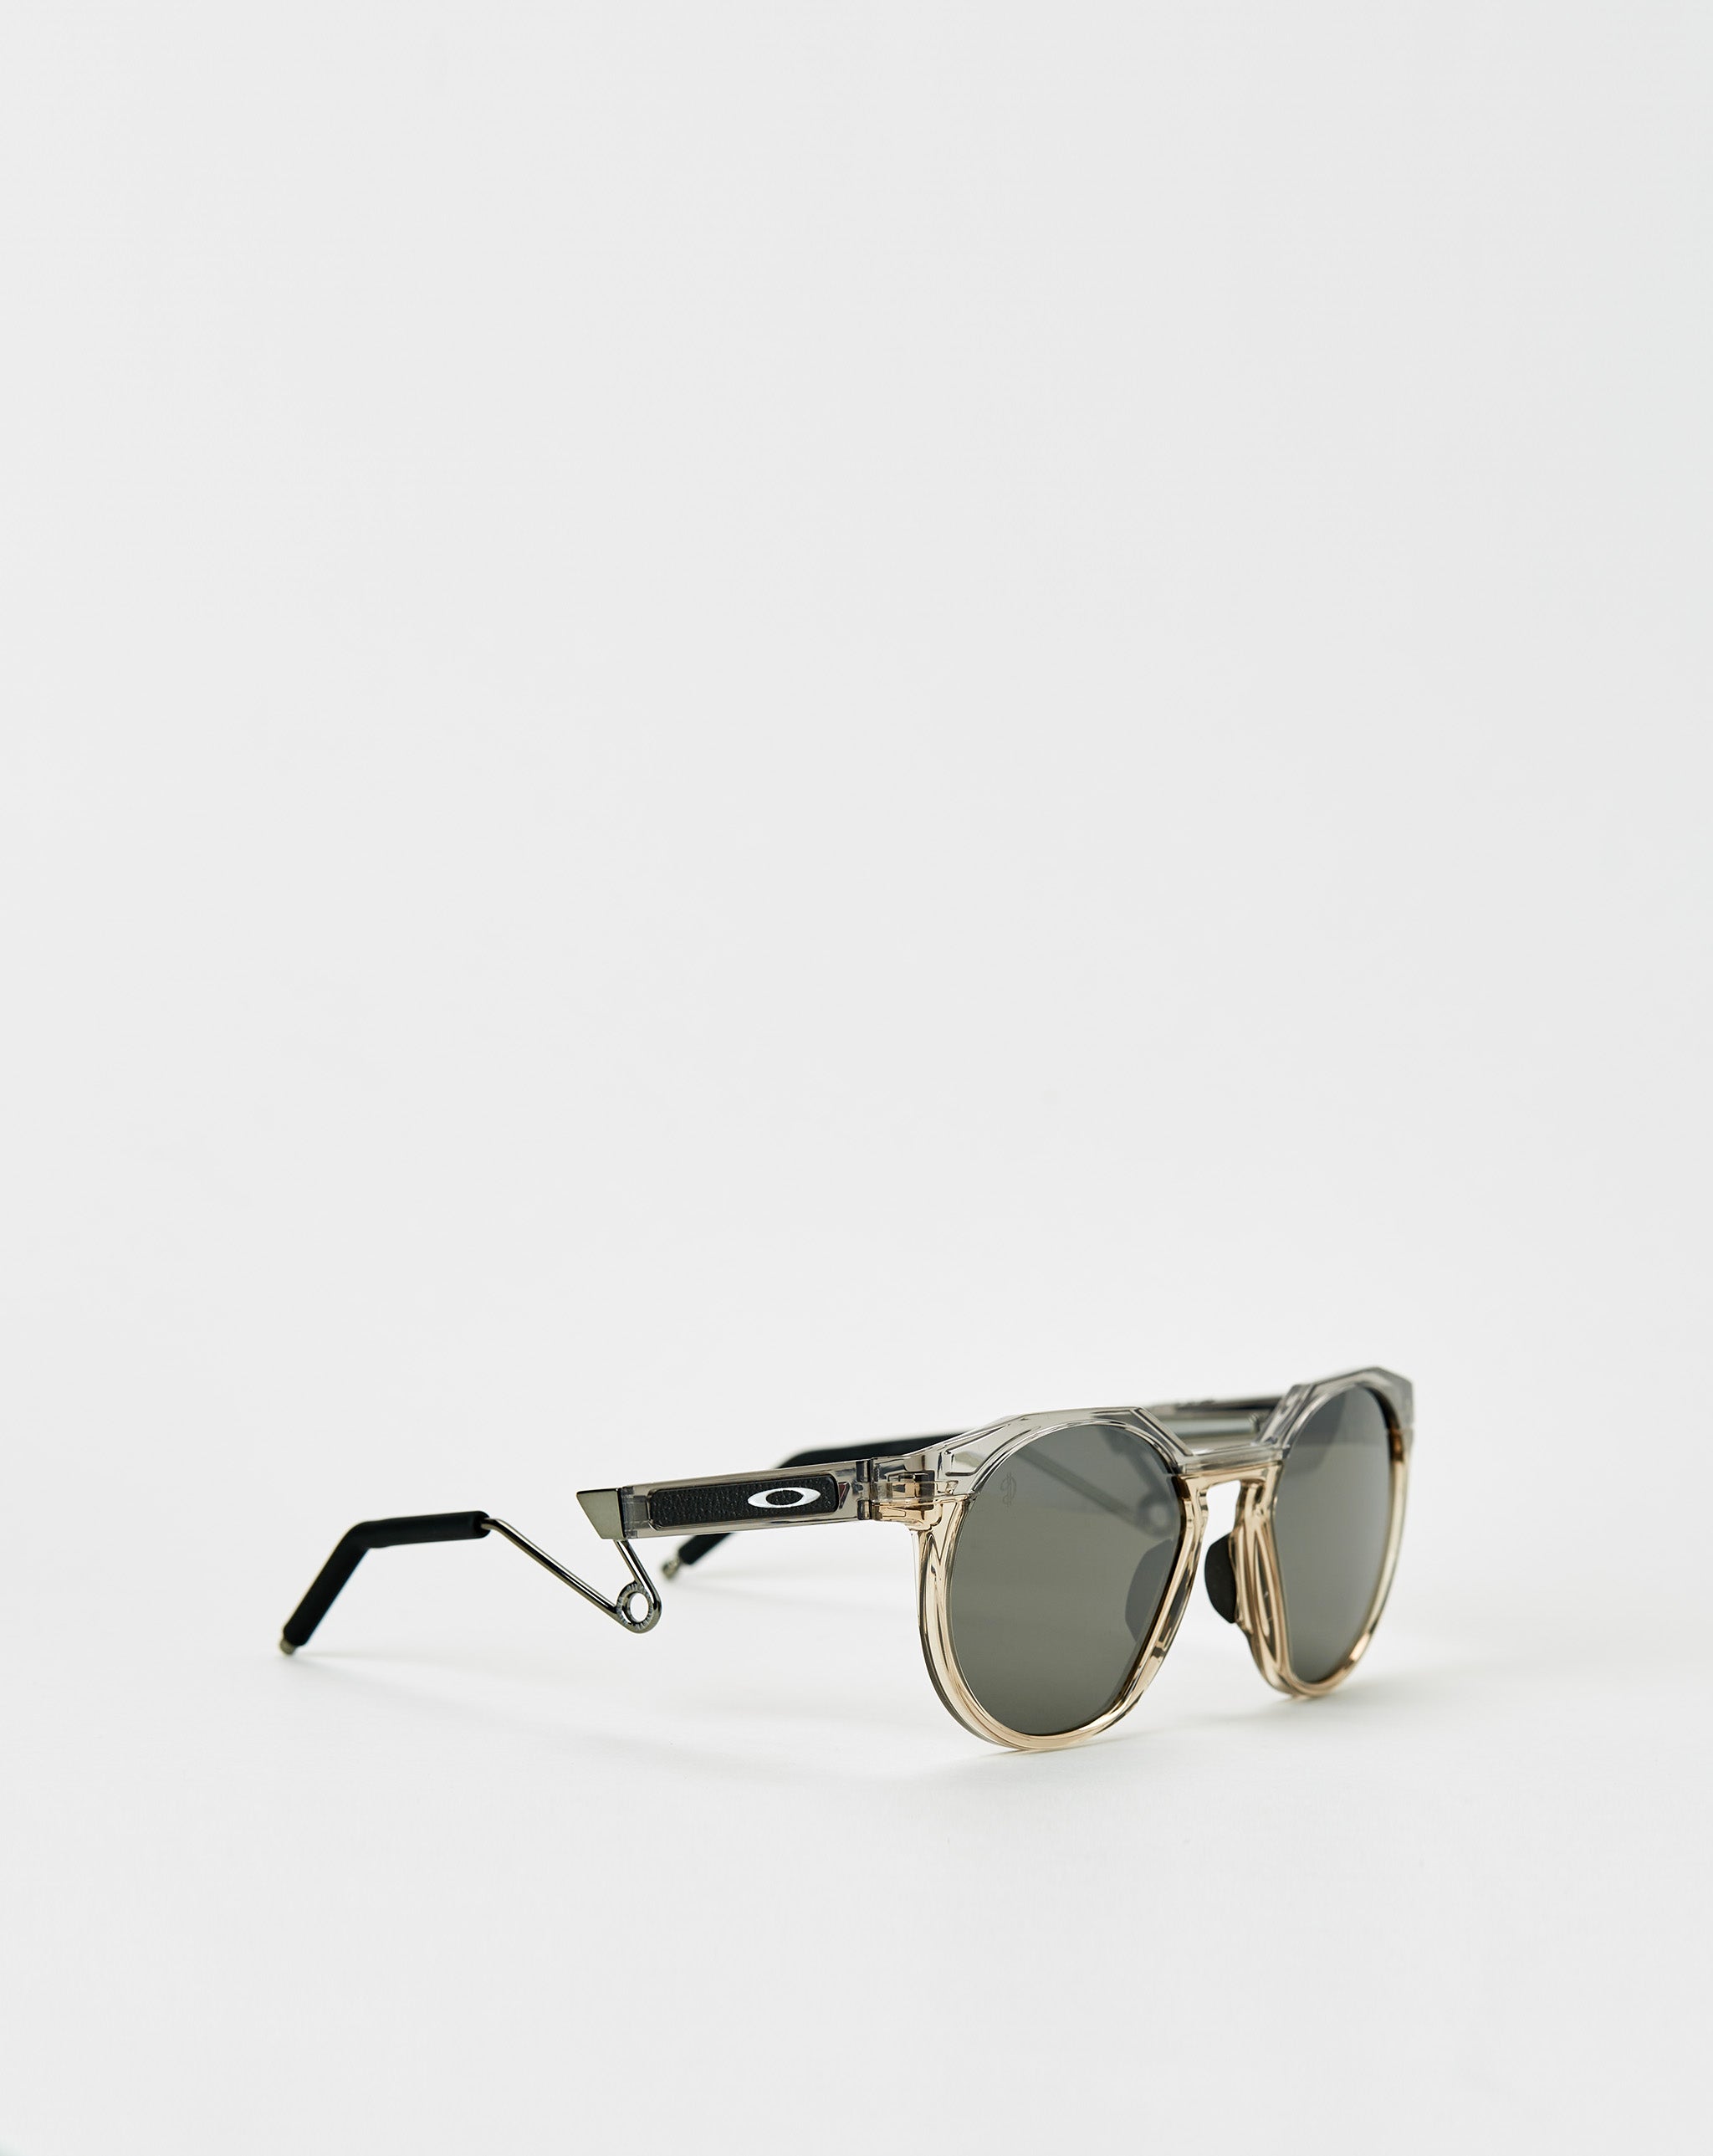 Oakley Linea Rossa tinted sunglasses FT0684  - Cheap 127-0 Jordan outlet